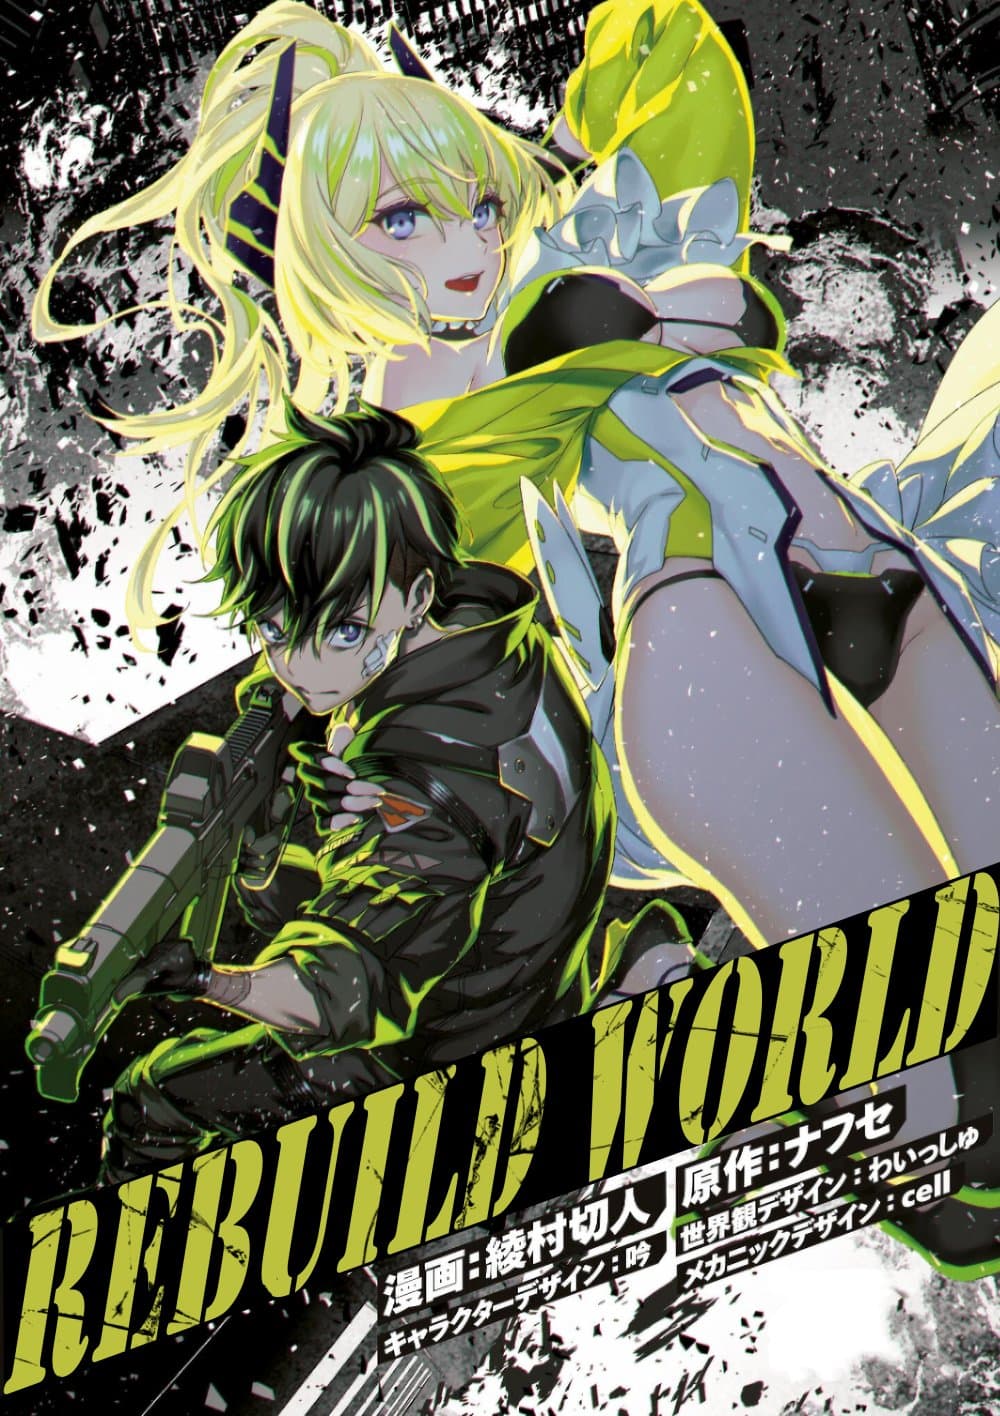 Rebuild World 27 (2)